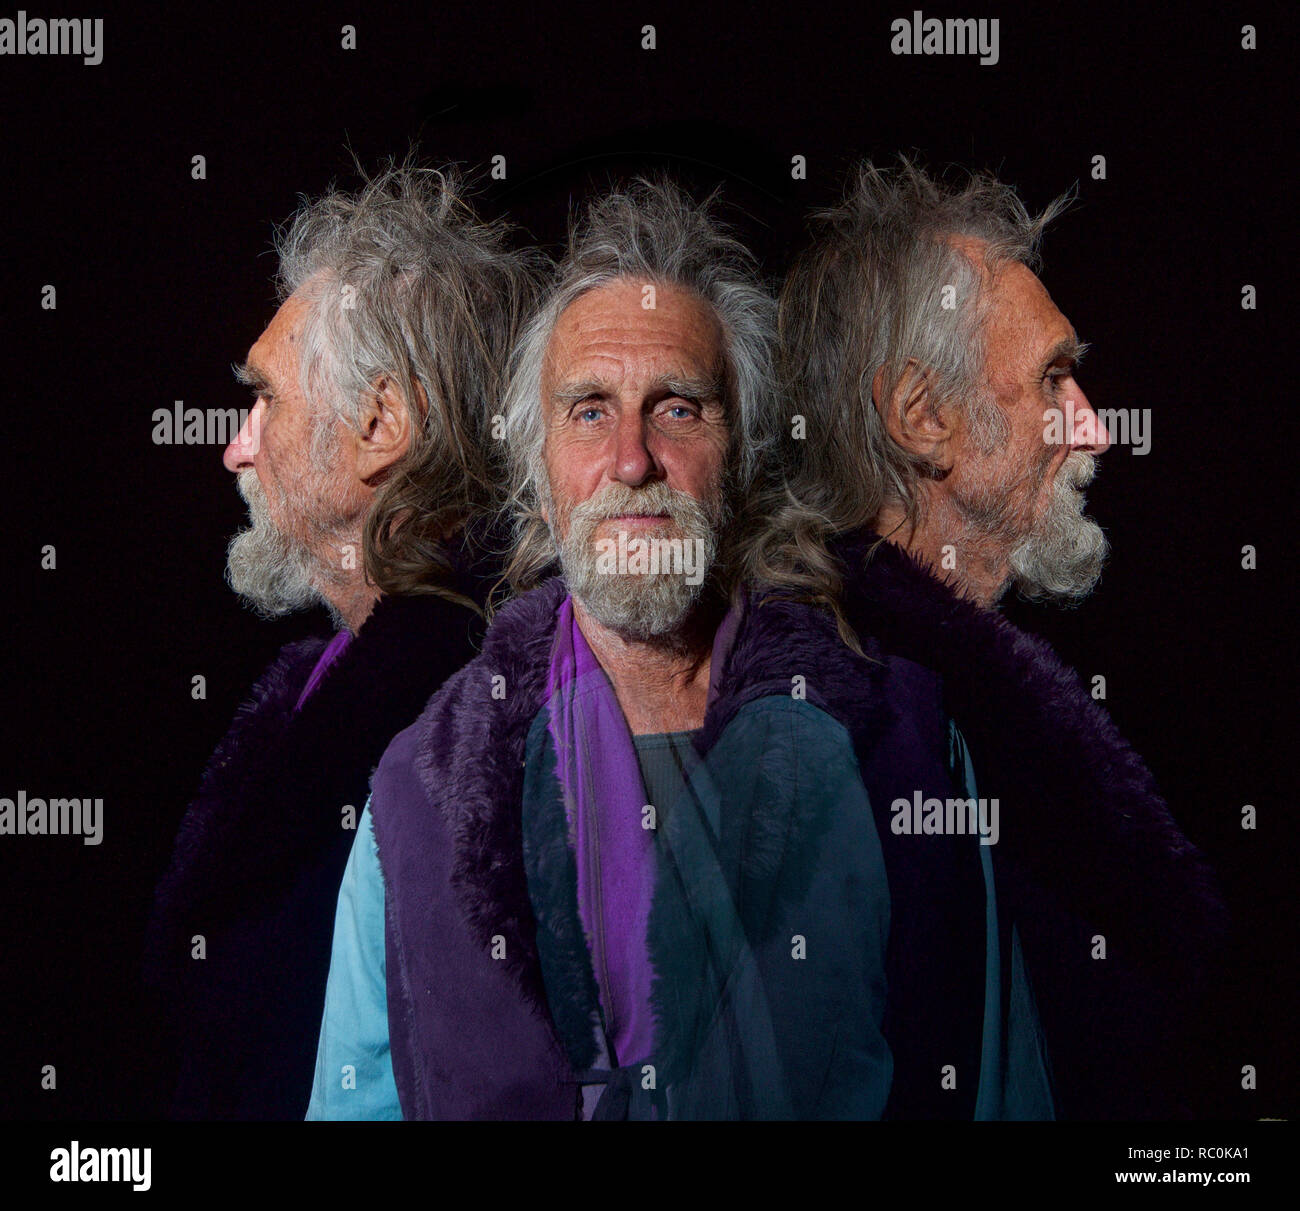 Triple portrait of elderly caucasian man Stock Photo